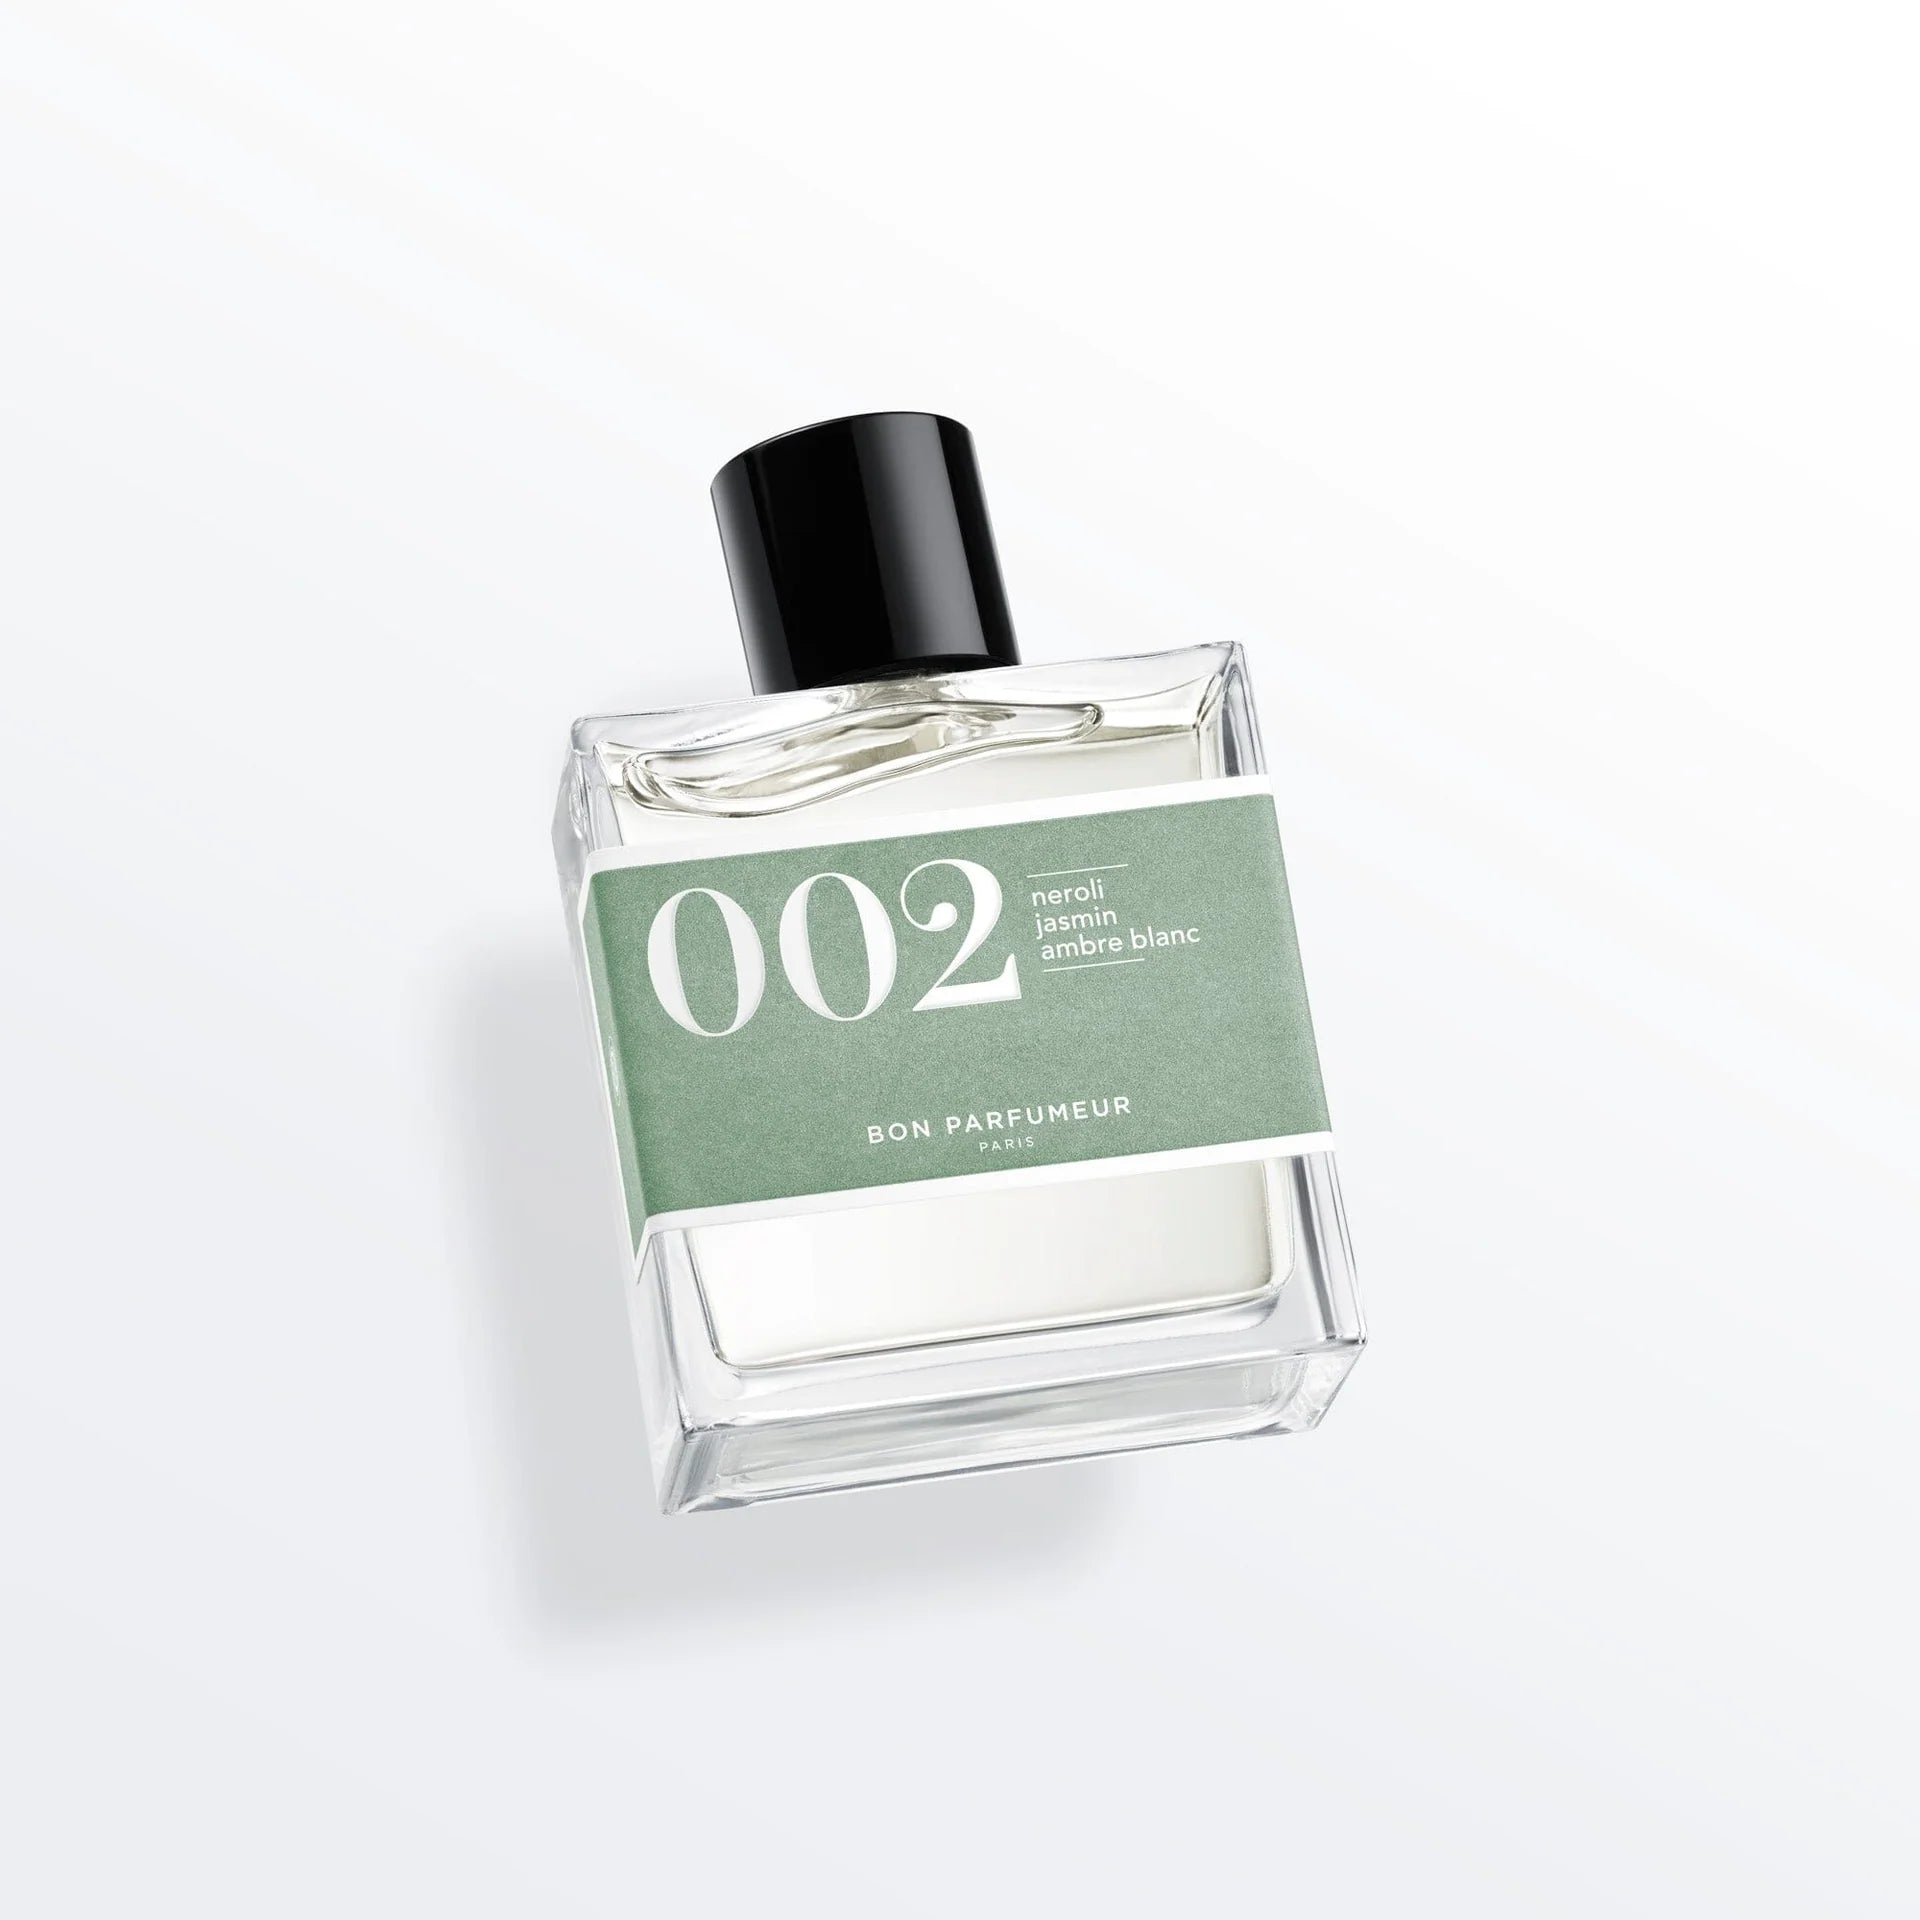 Perfume - Bon Parfumeur - 002